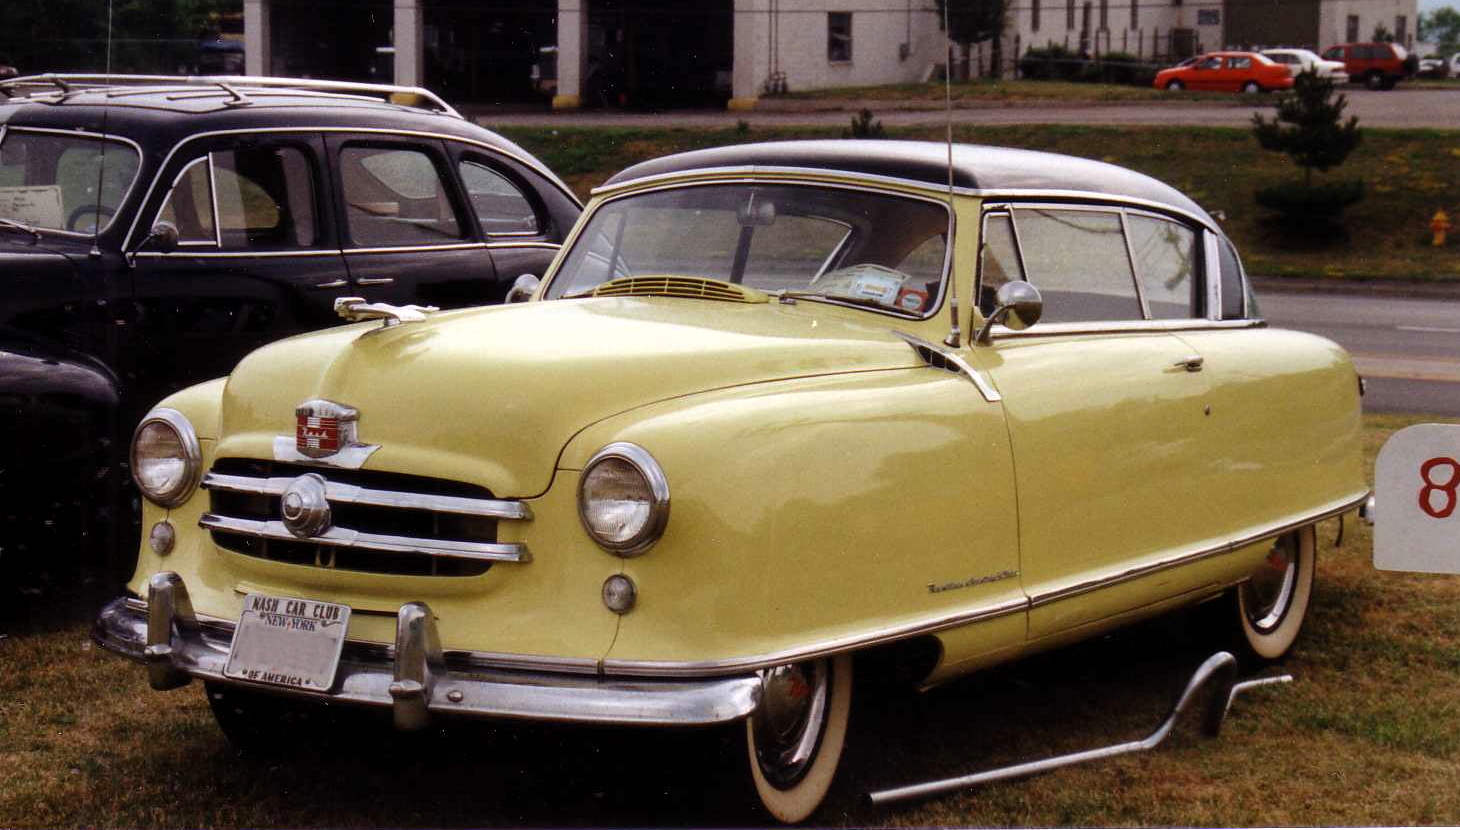 Dossier: Toit rigide 2 portes Nash Rambler jaune 1951.jpg - Wikimedia Commons